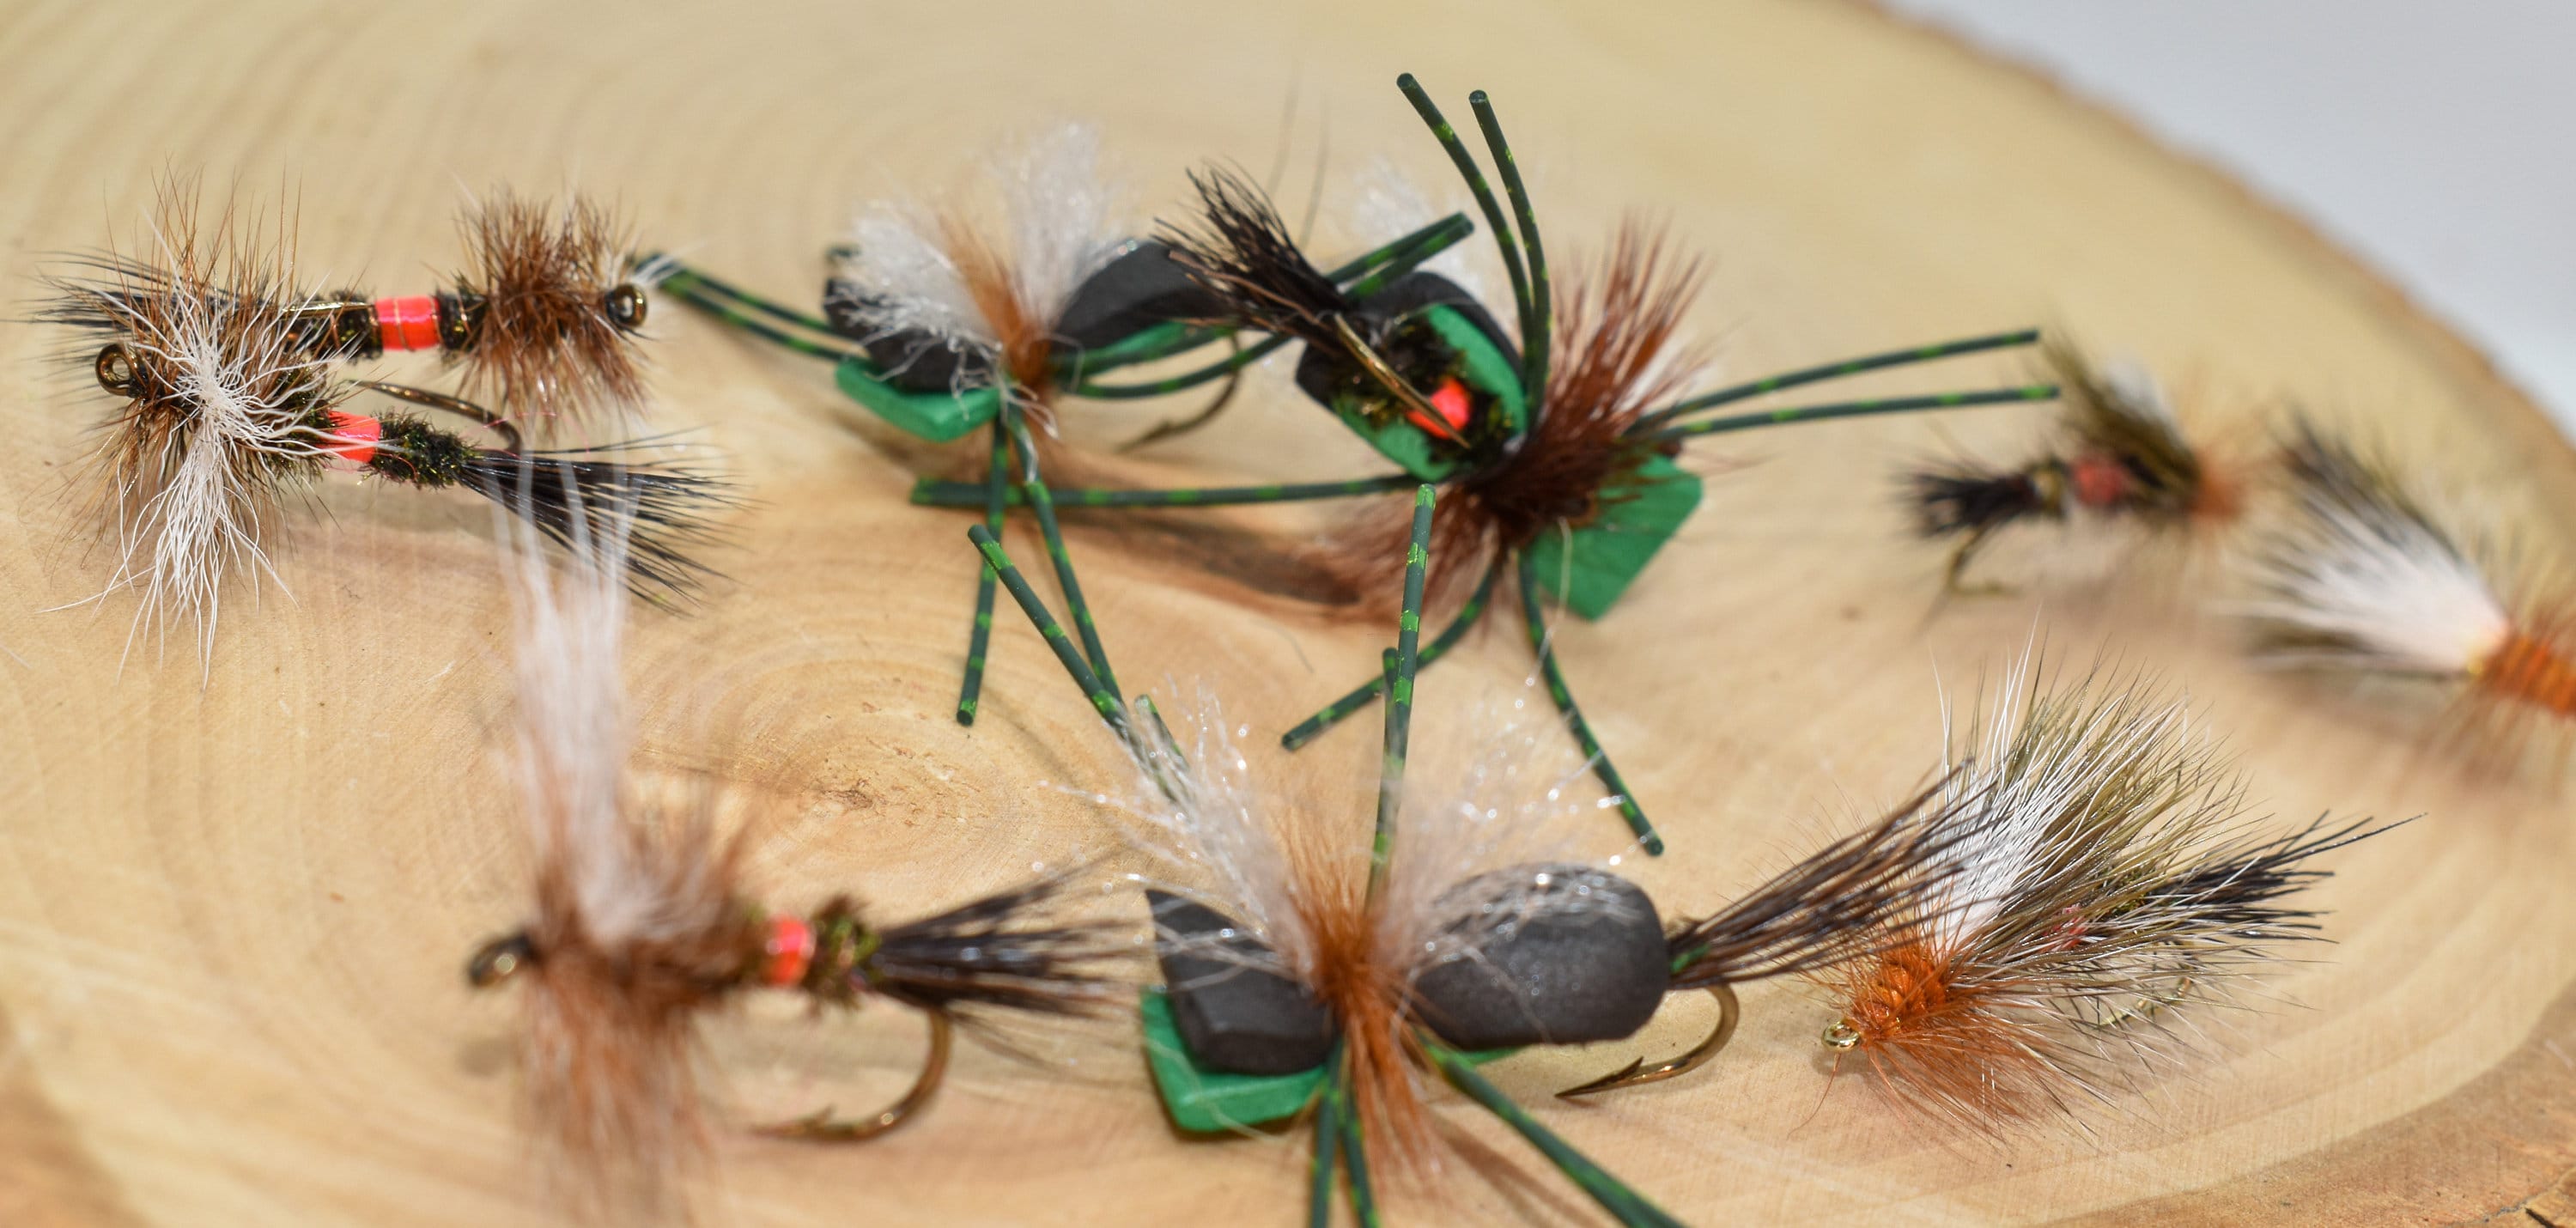 9 Fishing Dry Fly Assortment: 3 Royal Stimulator Flies, 3 Royal